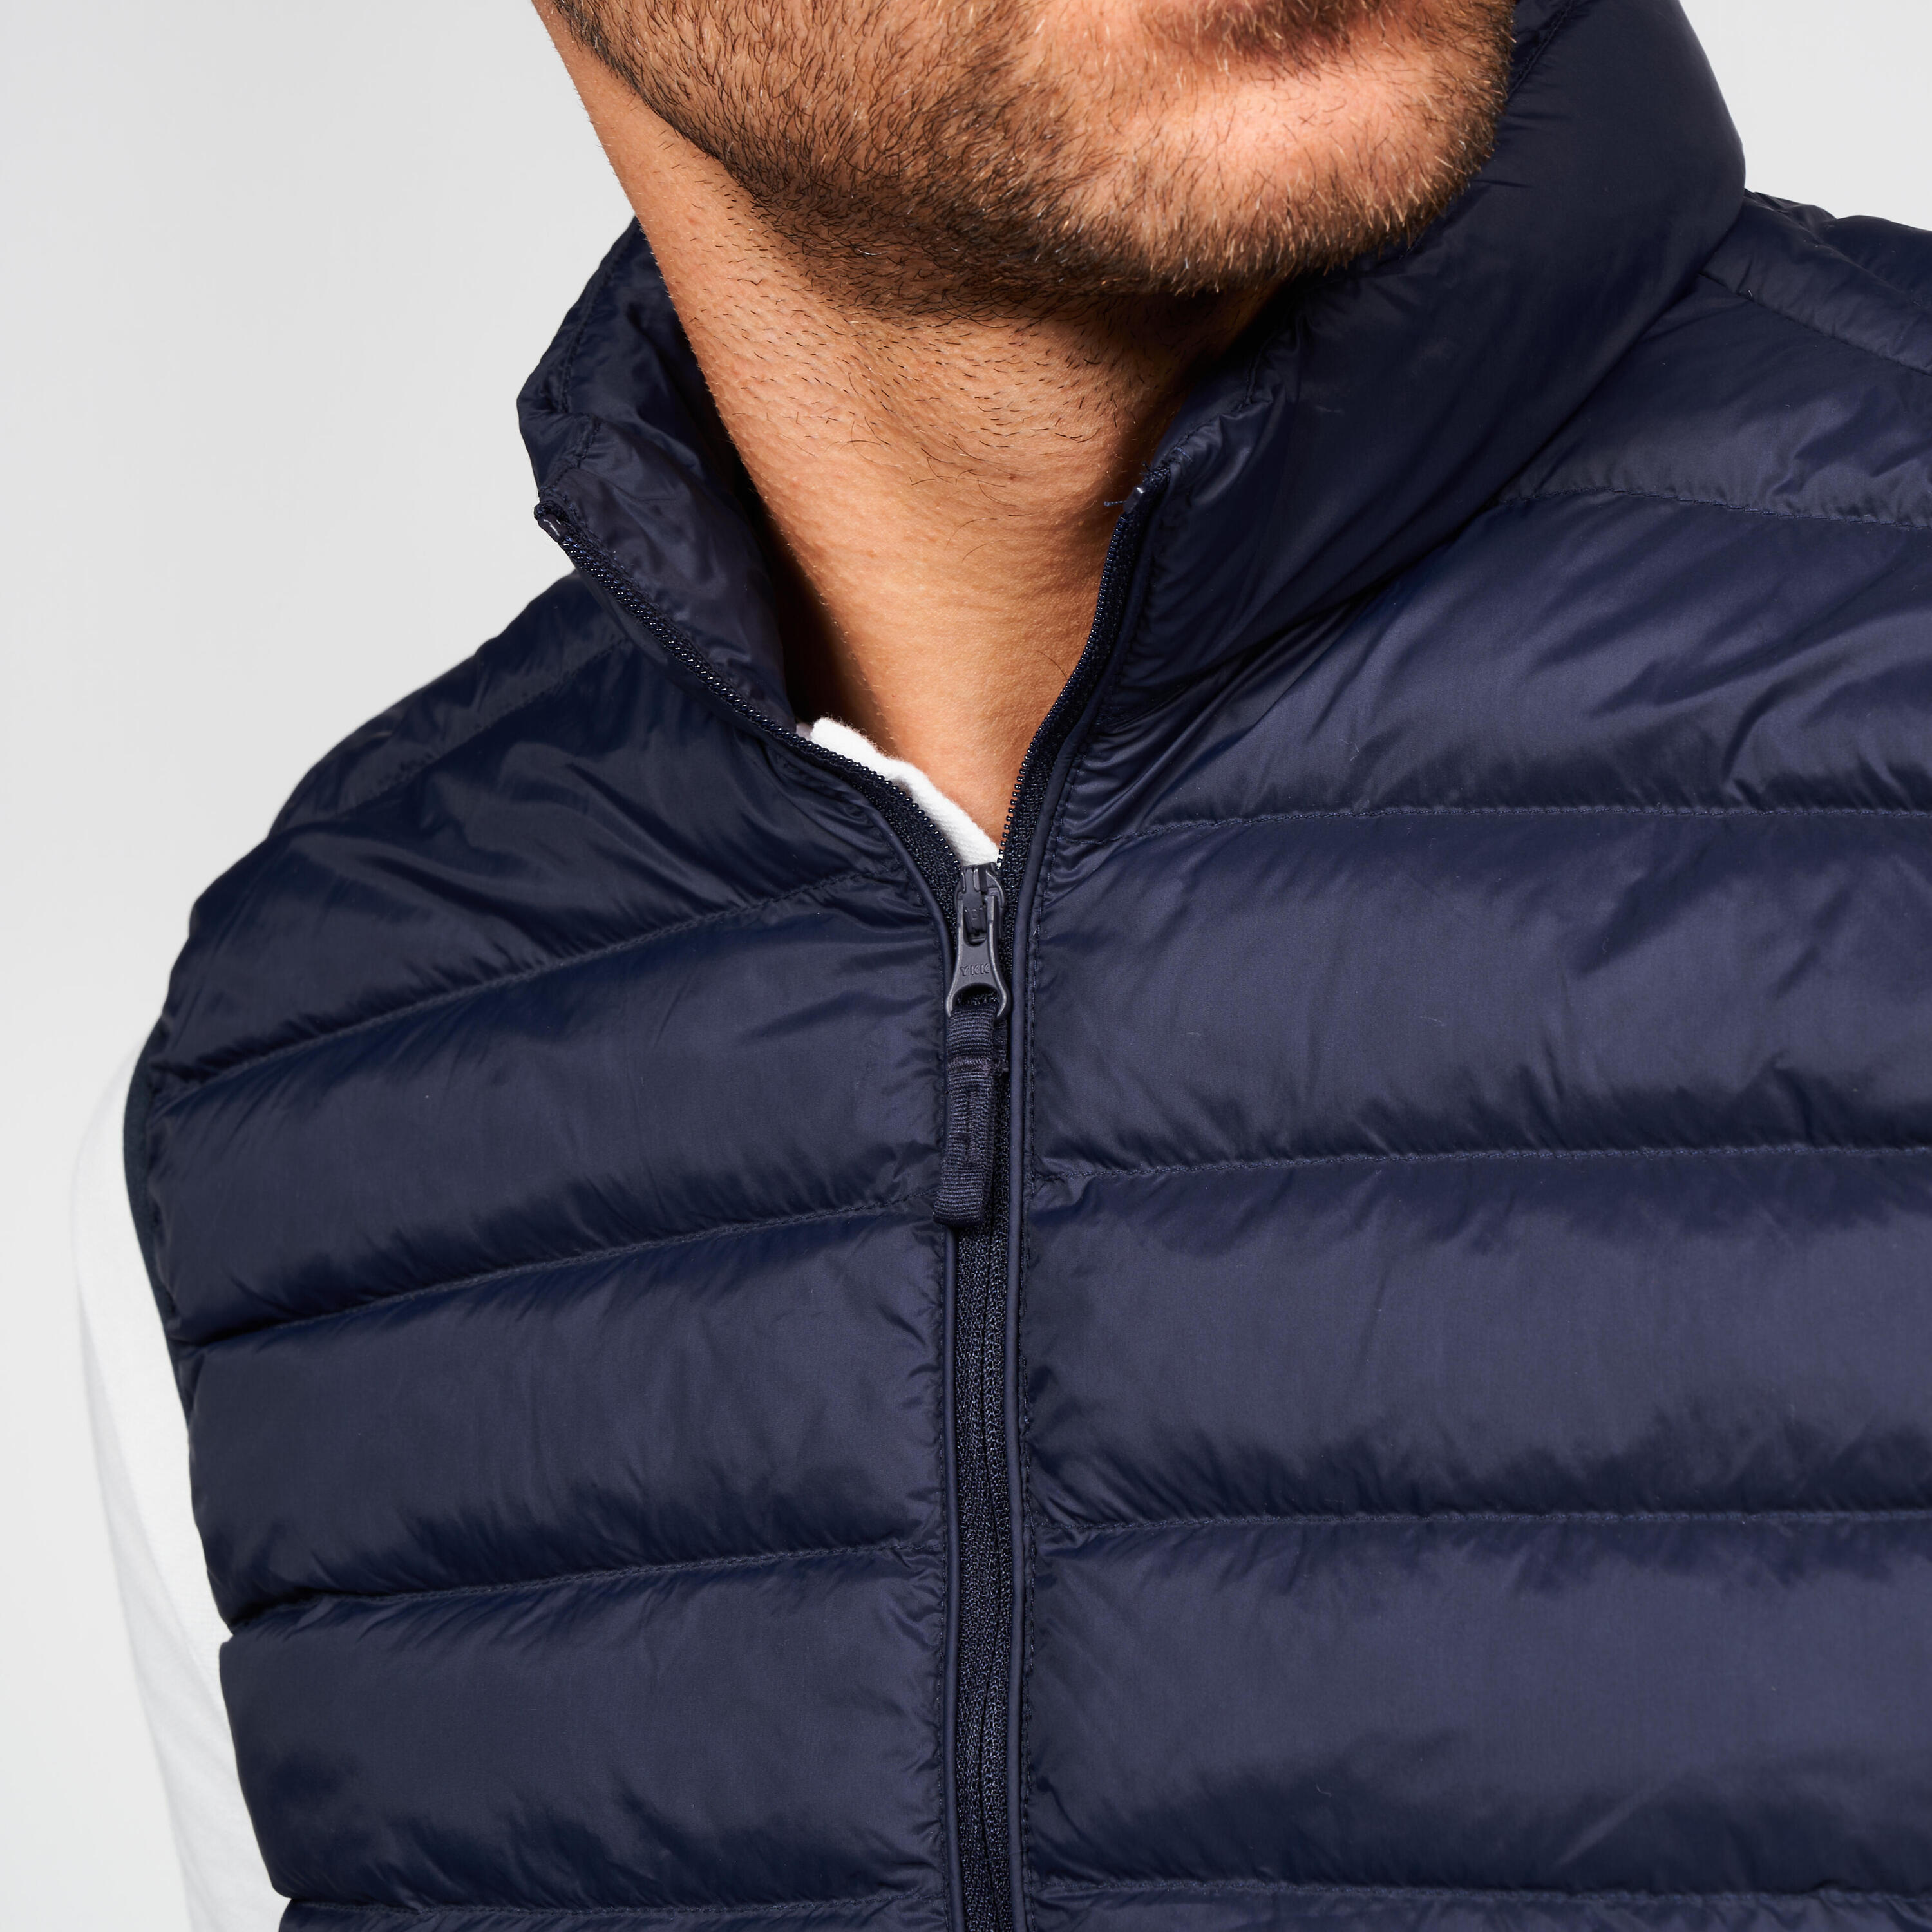 Men's golf sleeveless down jacket - MW500 navy blue 4/8